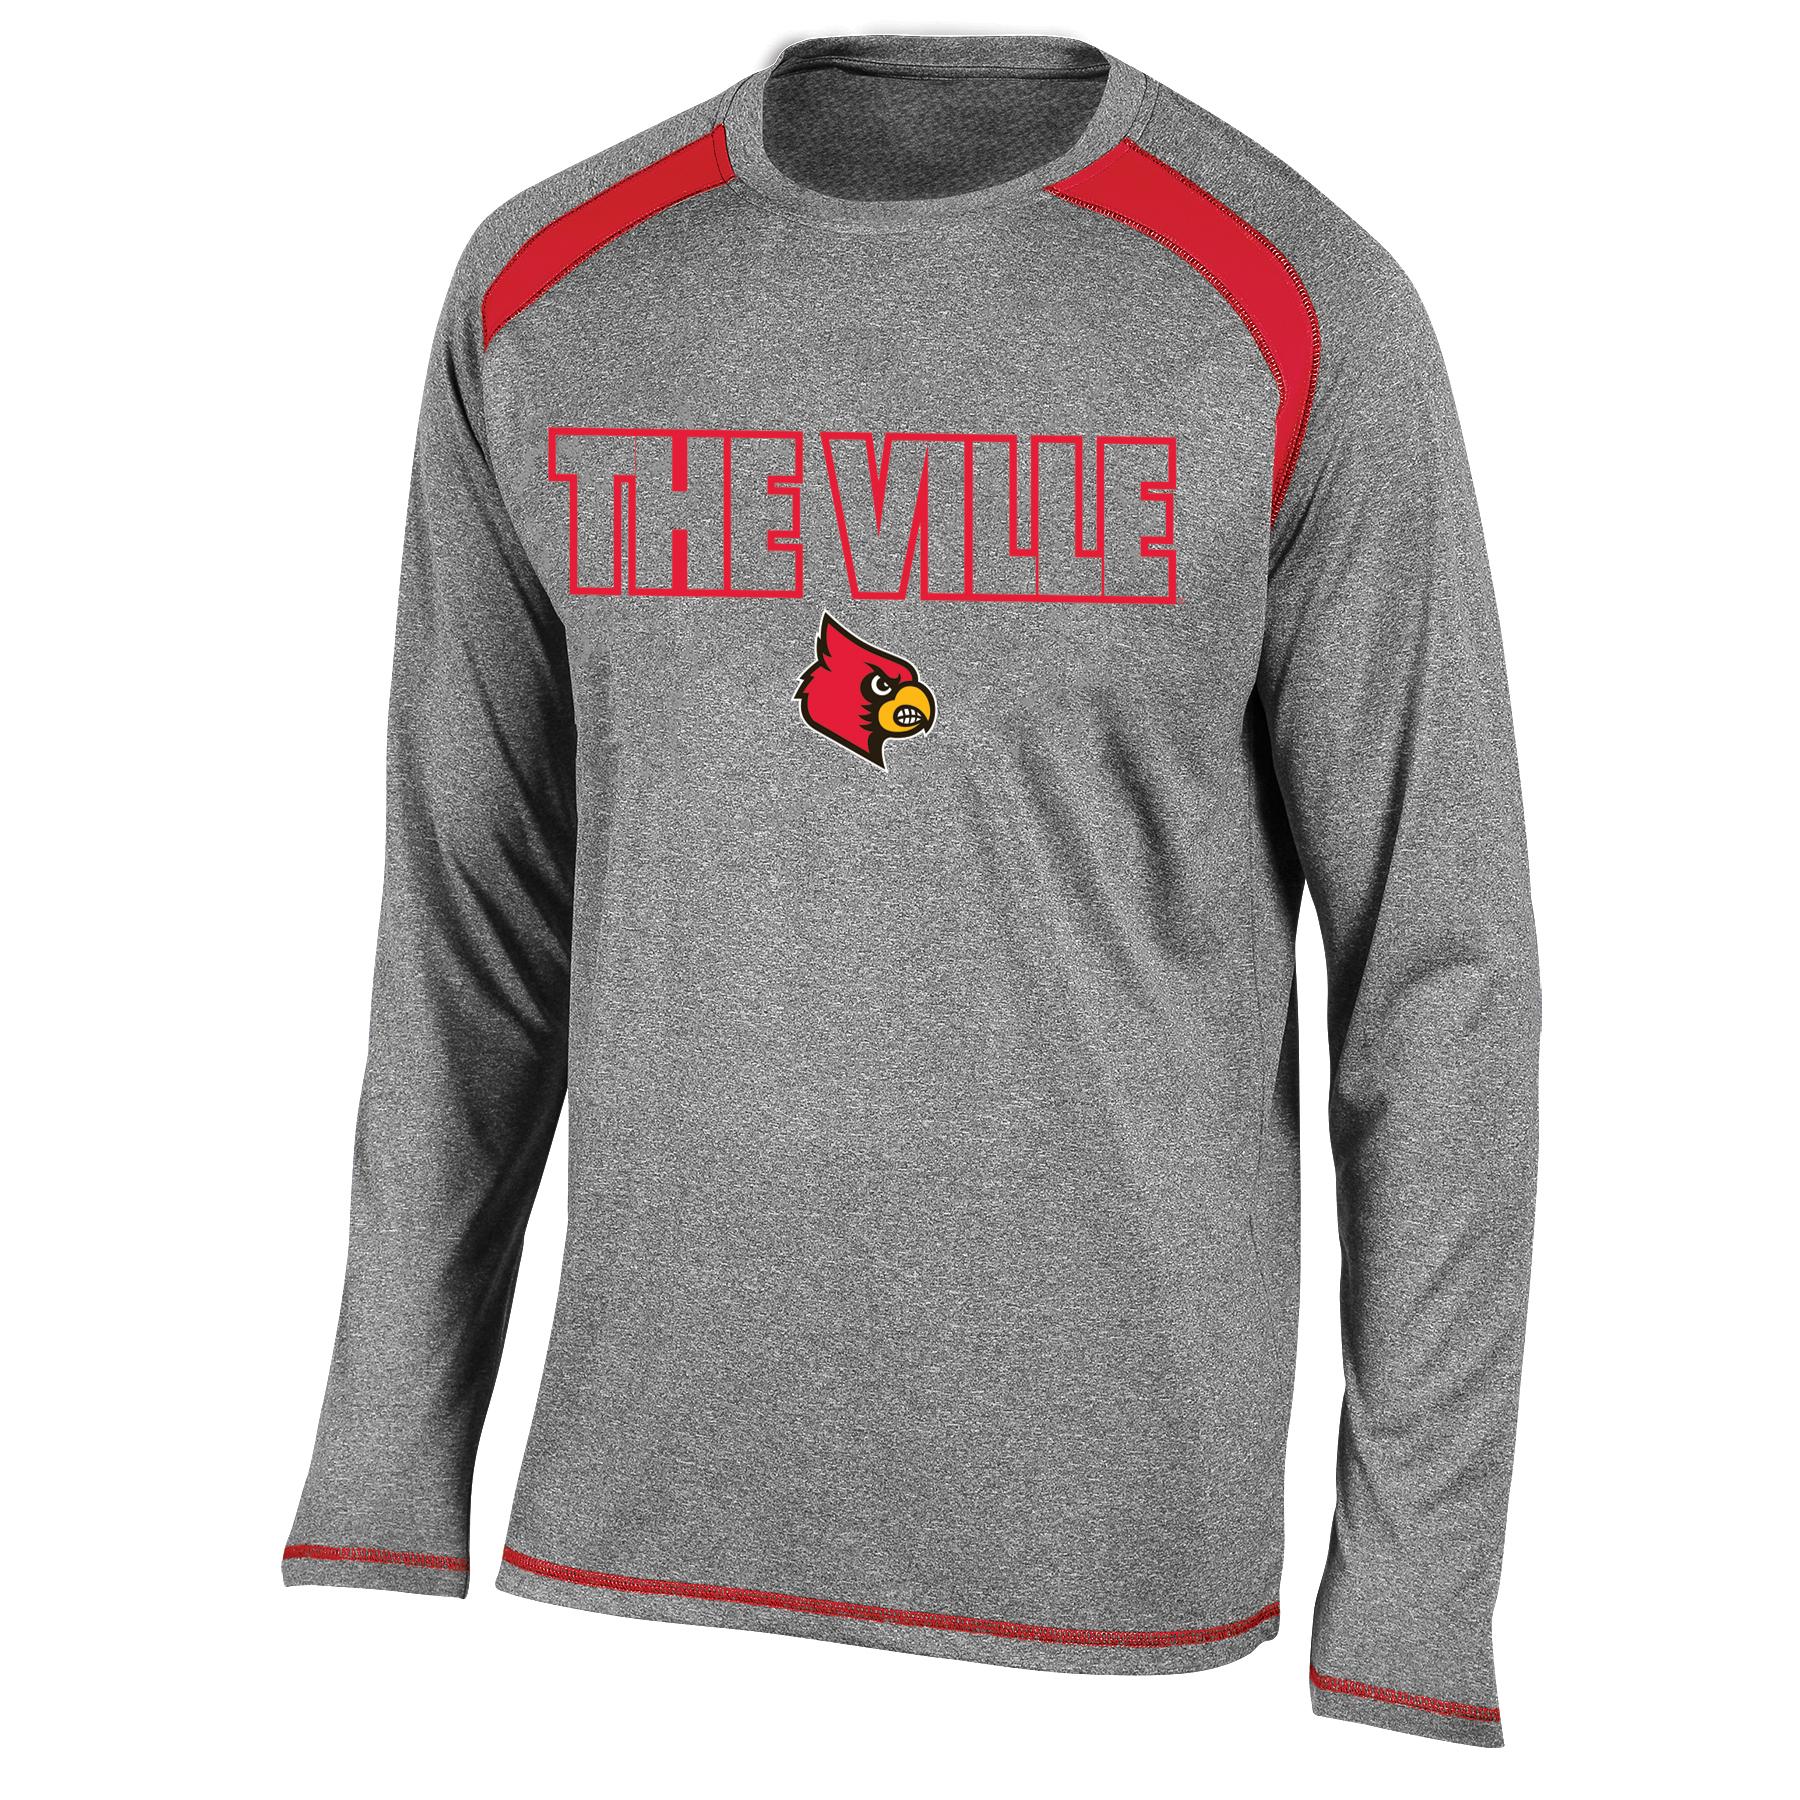 NCAA Men's Big & Tall Athletic Shirt - University of Louisville Cardinals